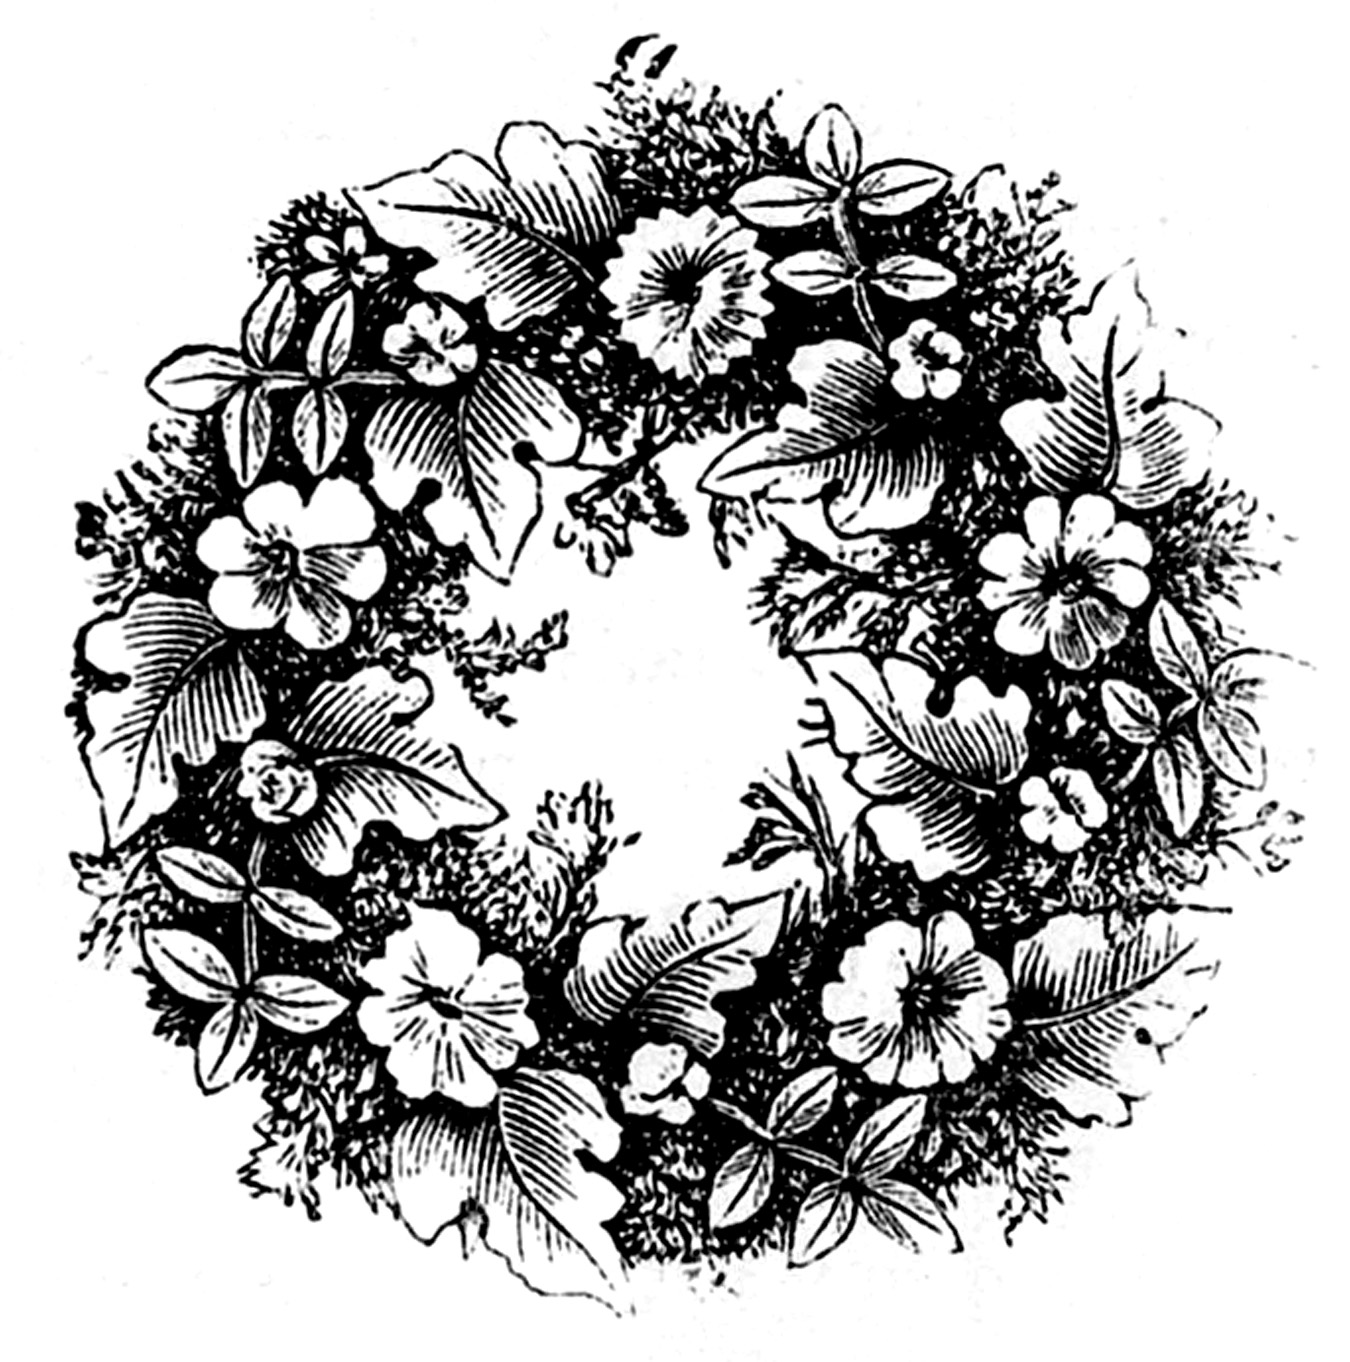 Vintage clip art floral wreaths the graphics fairy